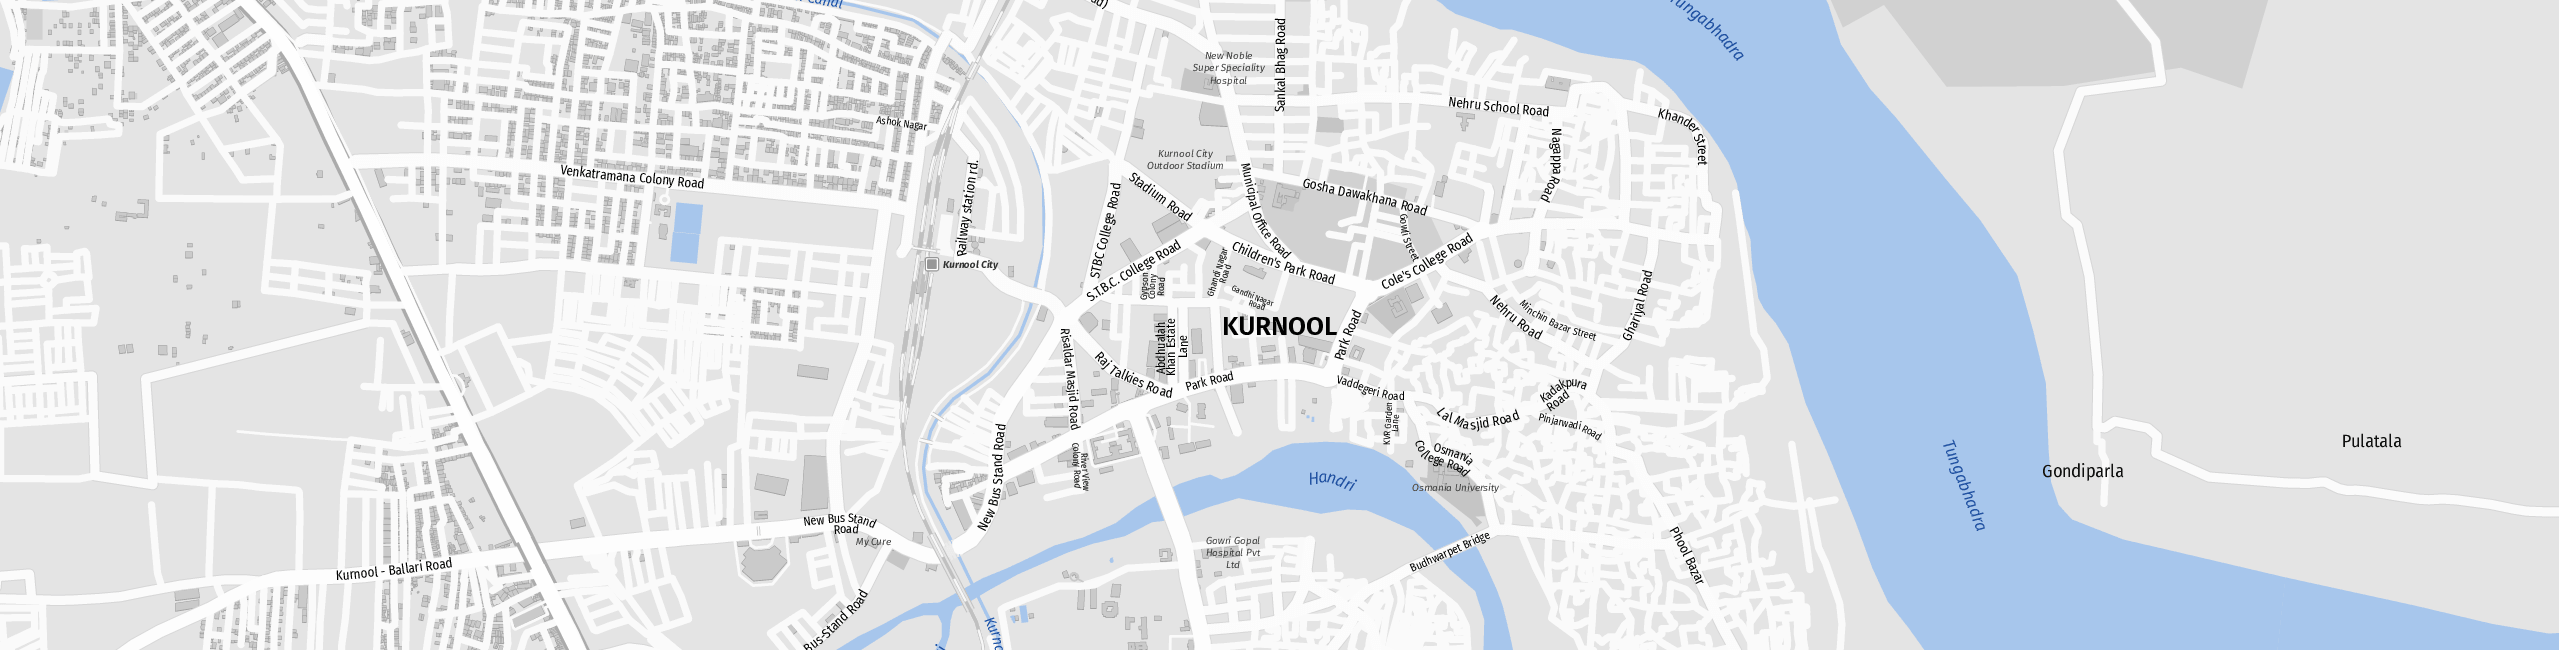 Stadtplan Kurnool zum Downloaden.